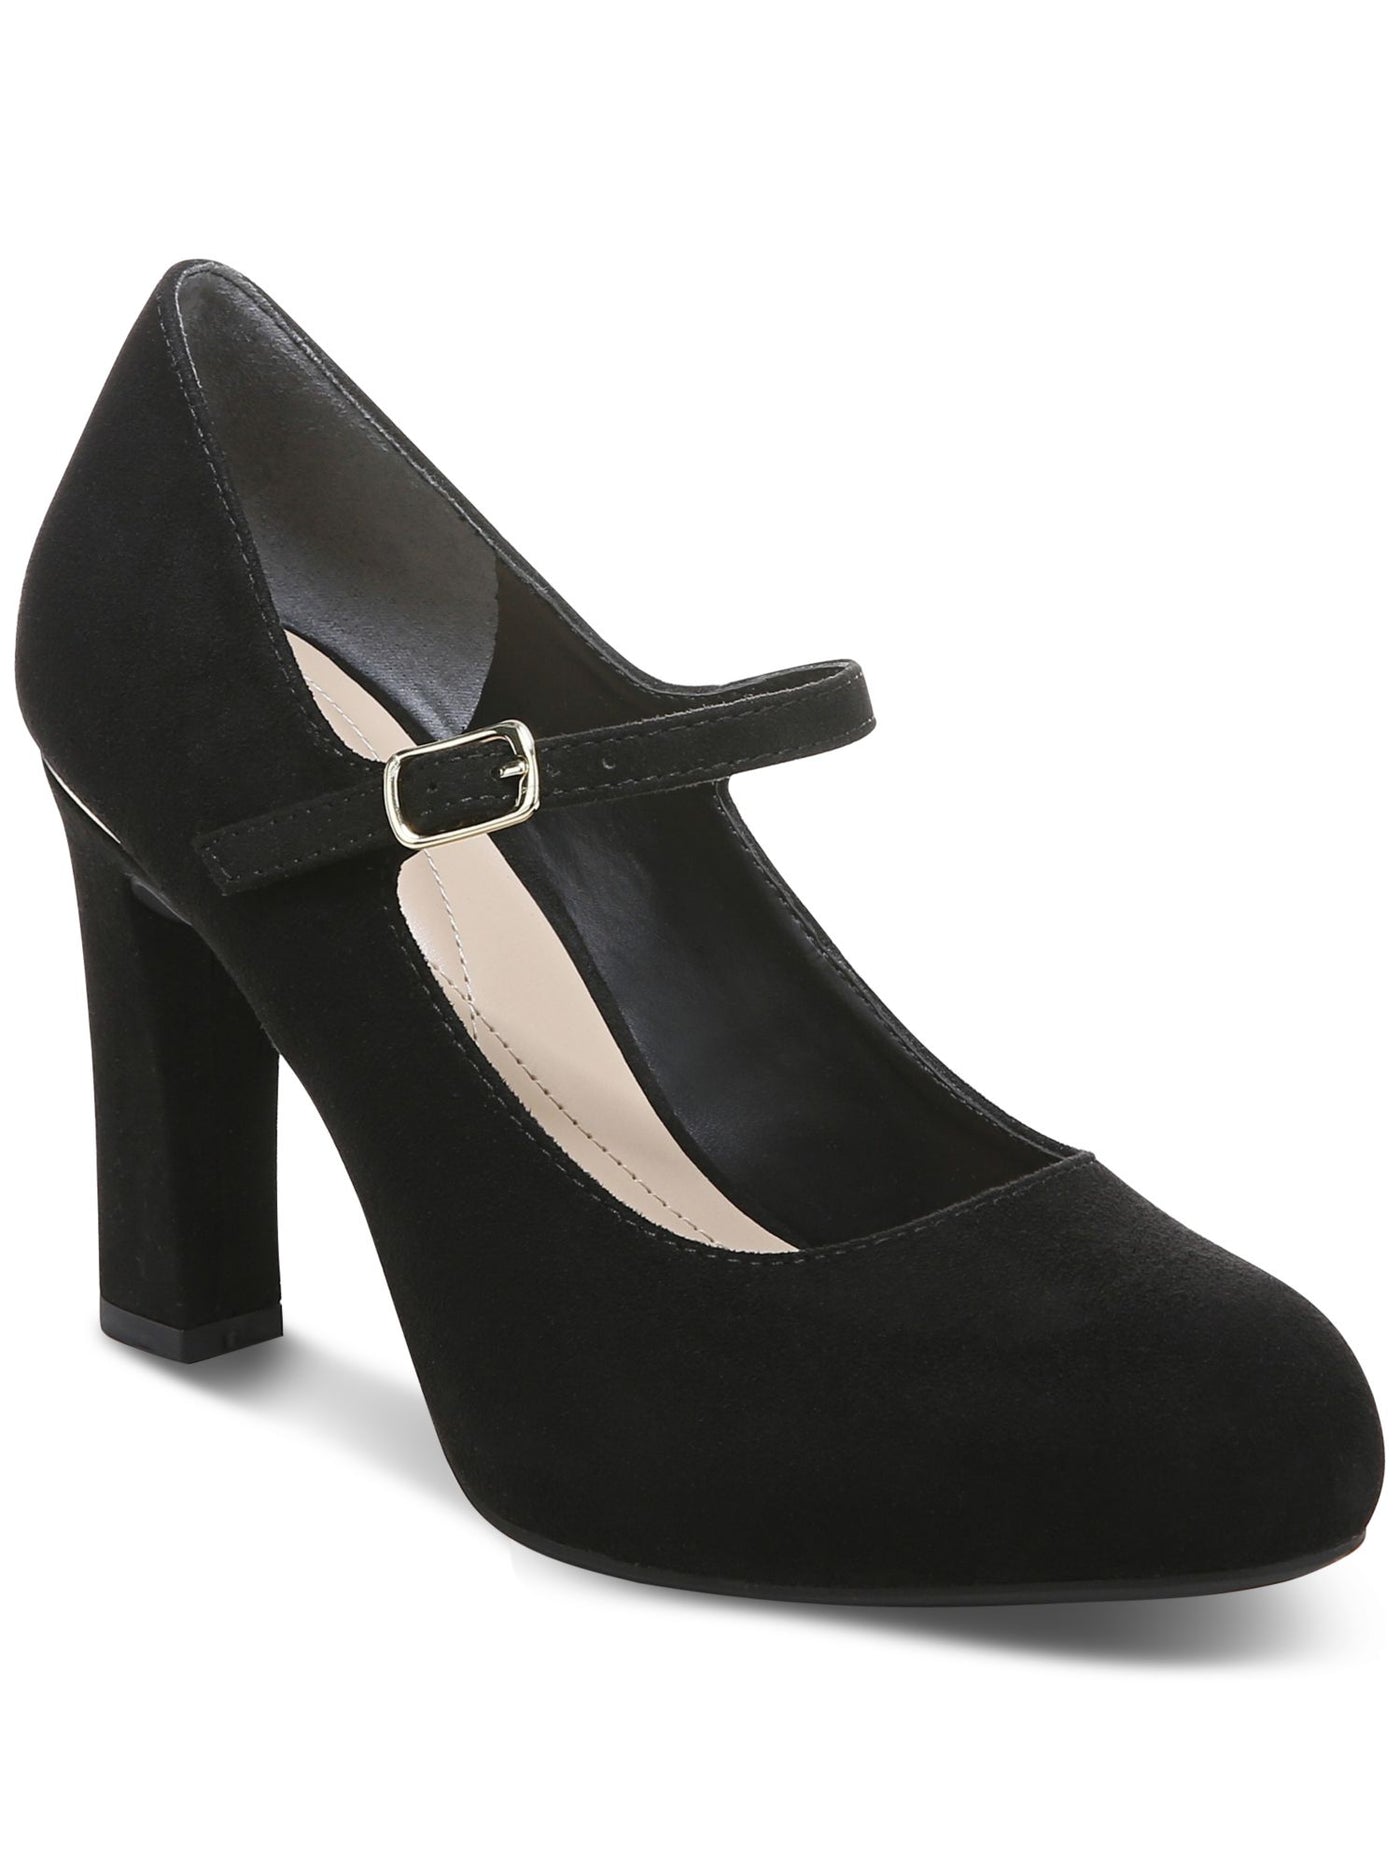 ALFANI Womens Black Mary Jane Comfort Tresta Round Toe Block Heel Buckle Dress Pumps Shoes 11 M